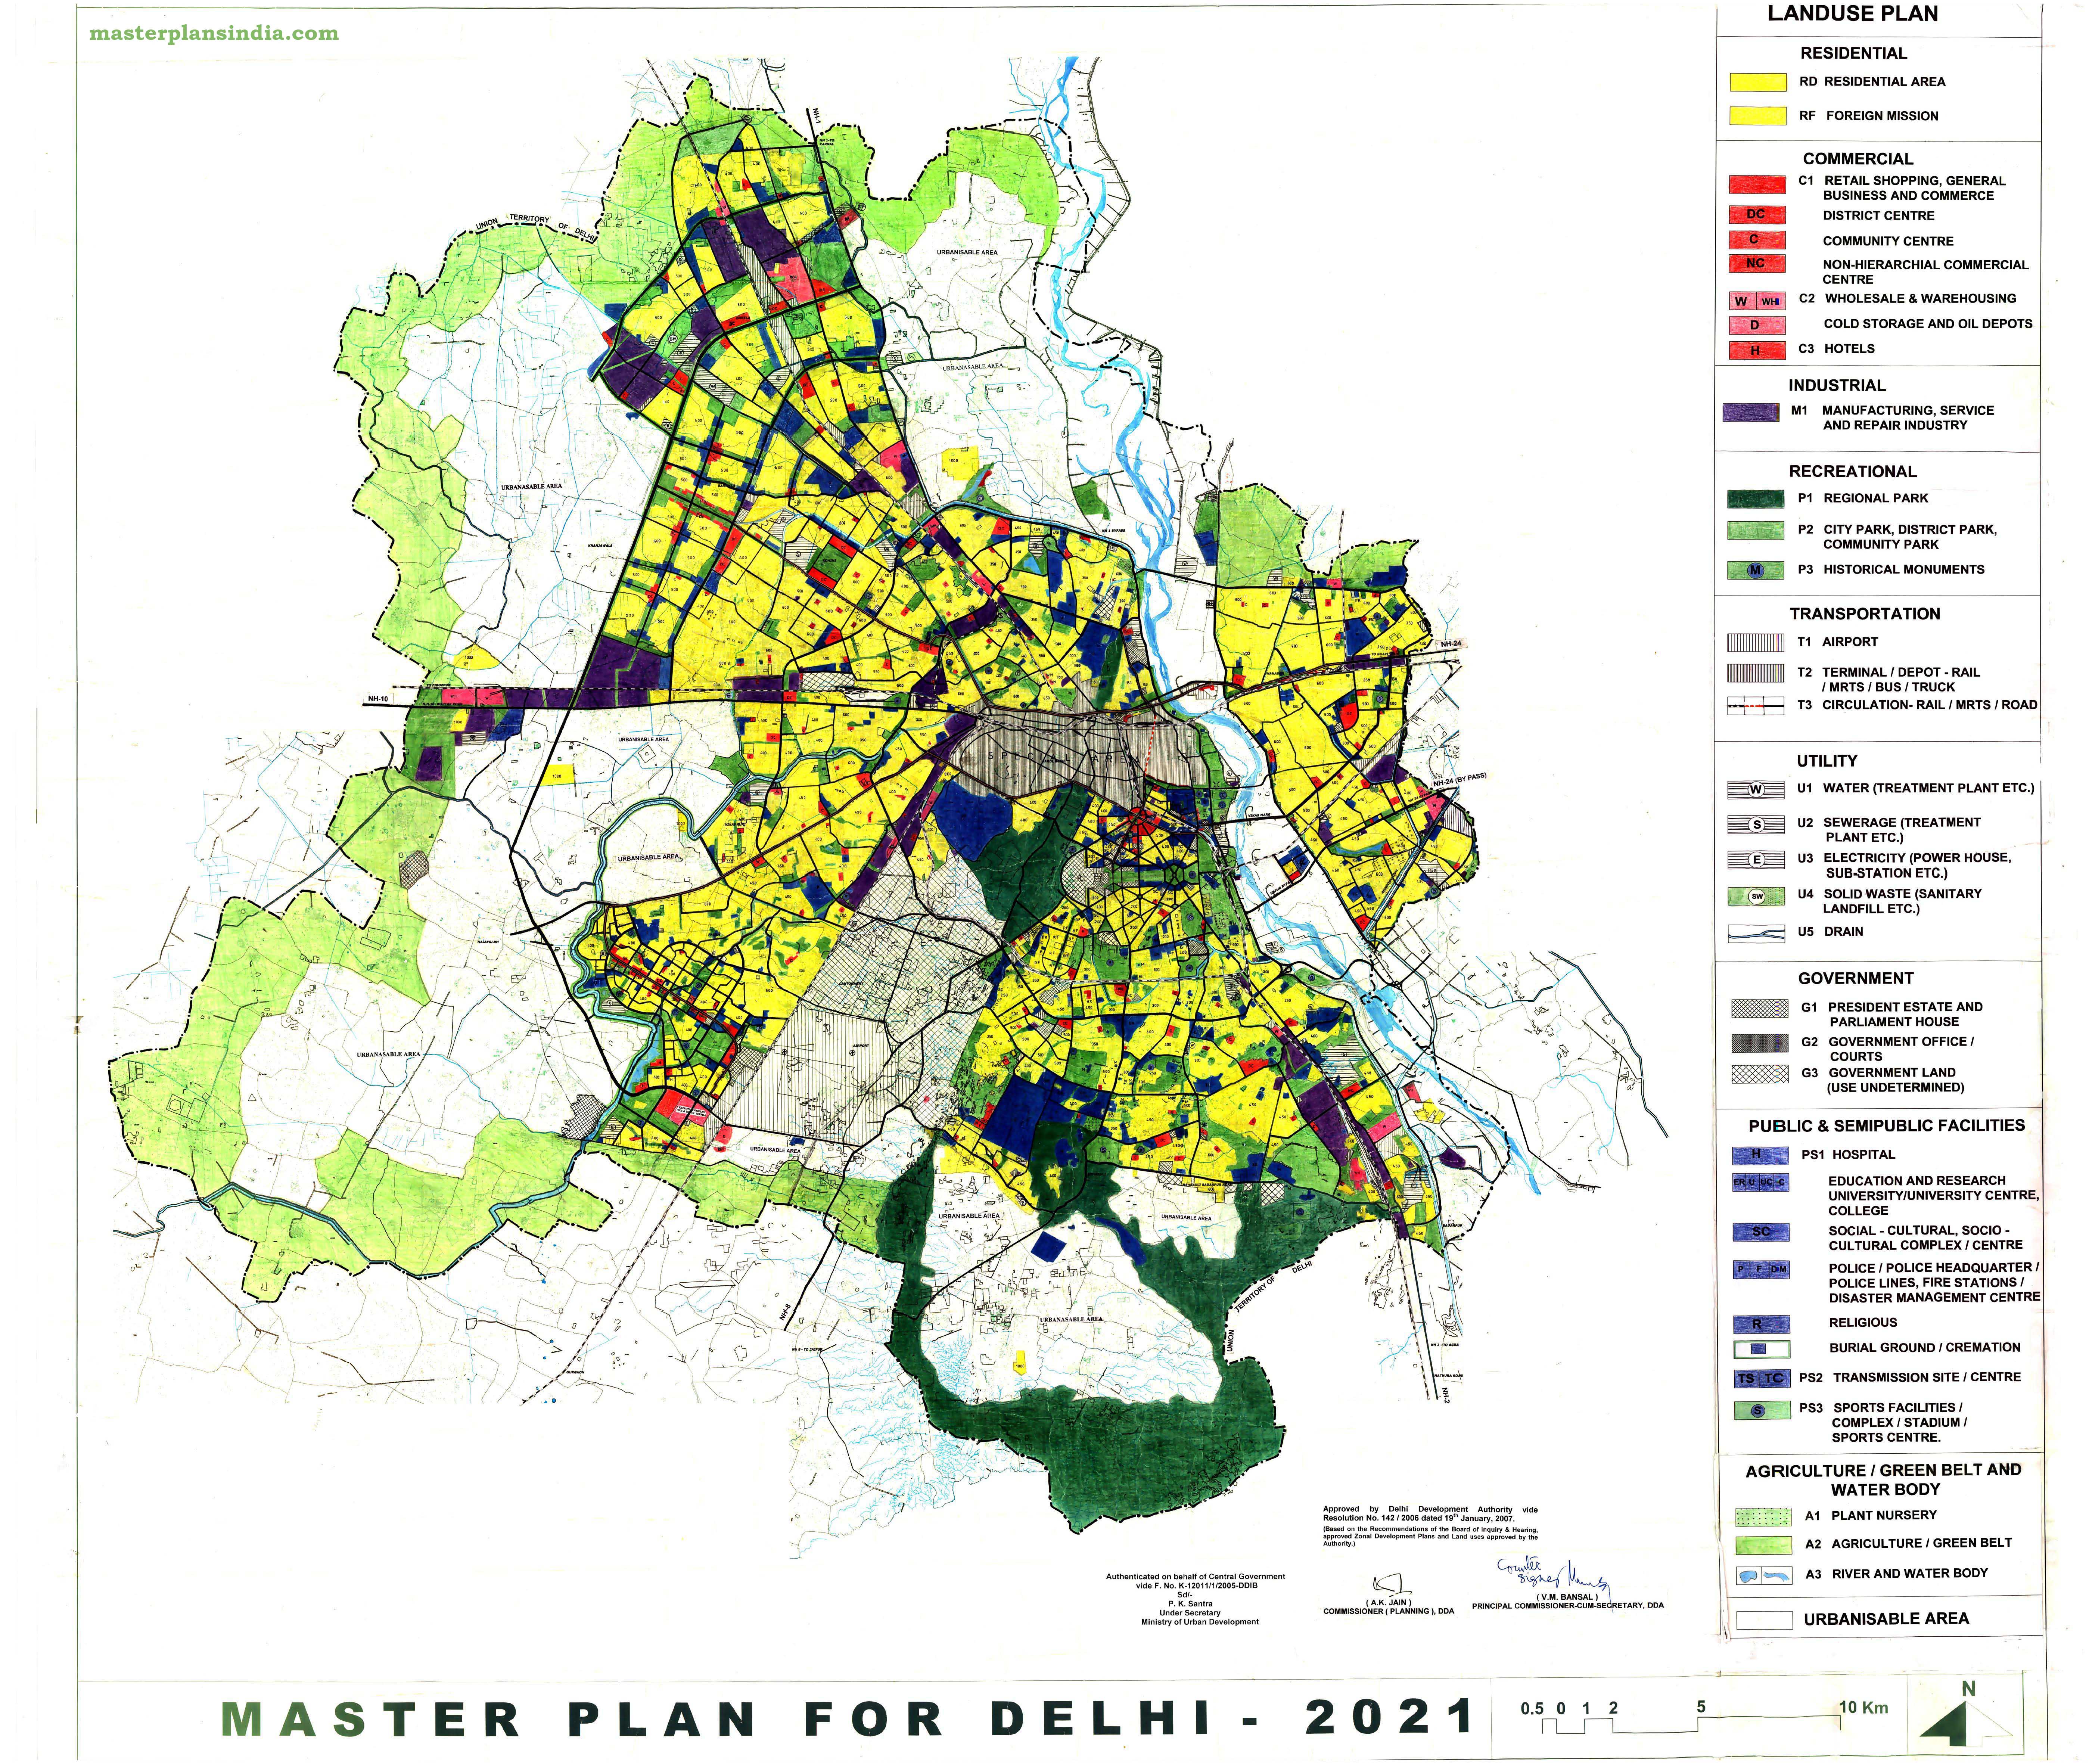 Delhi Master Plan 2021, Land Use and Development Plan Map